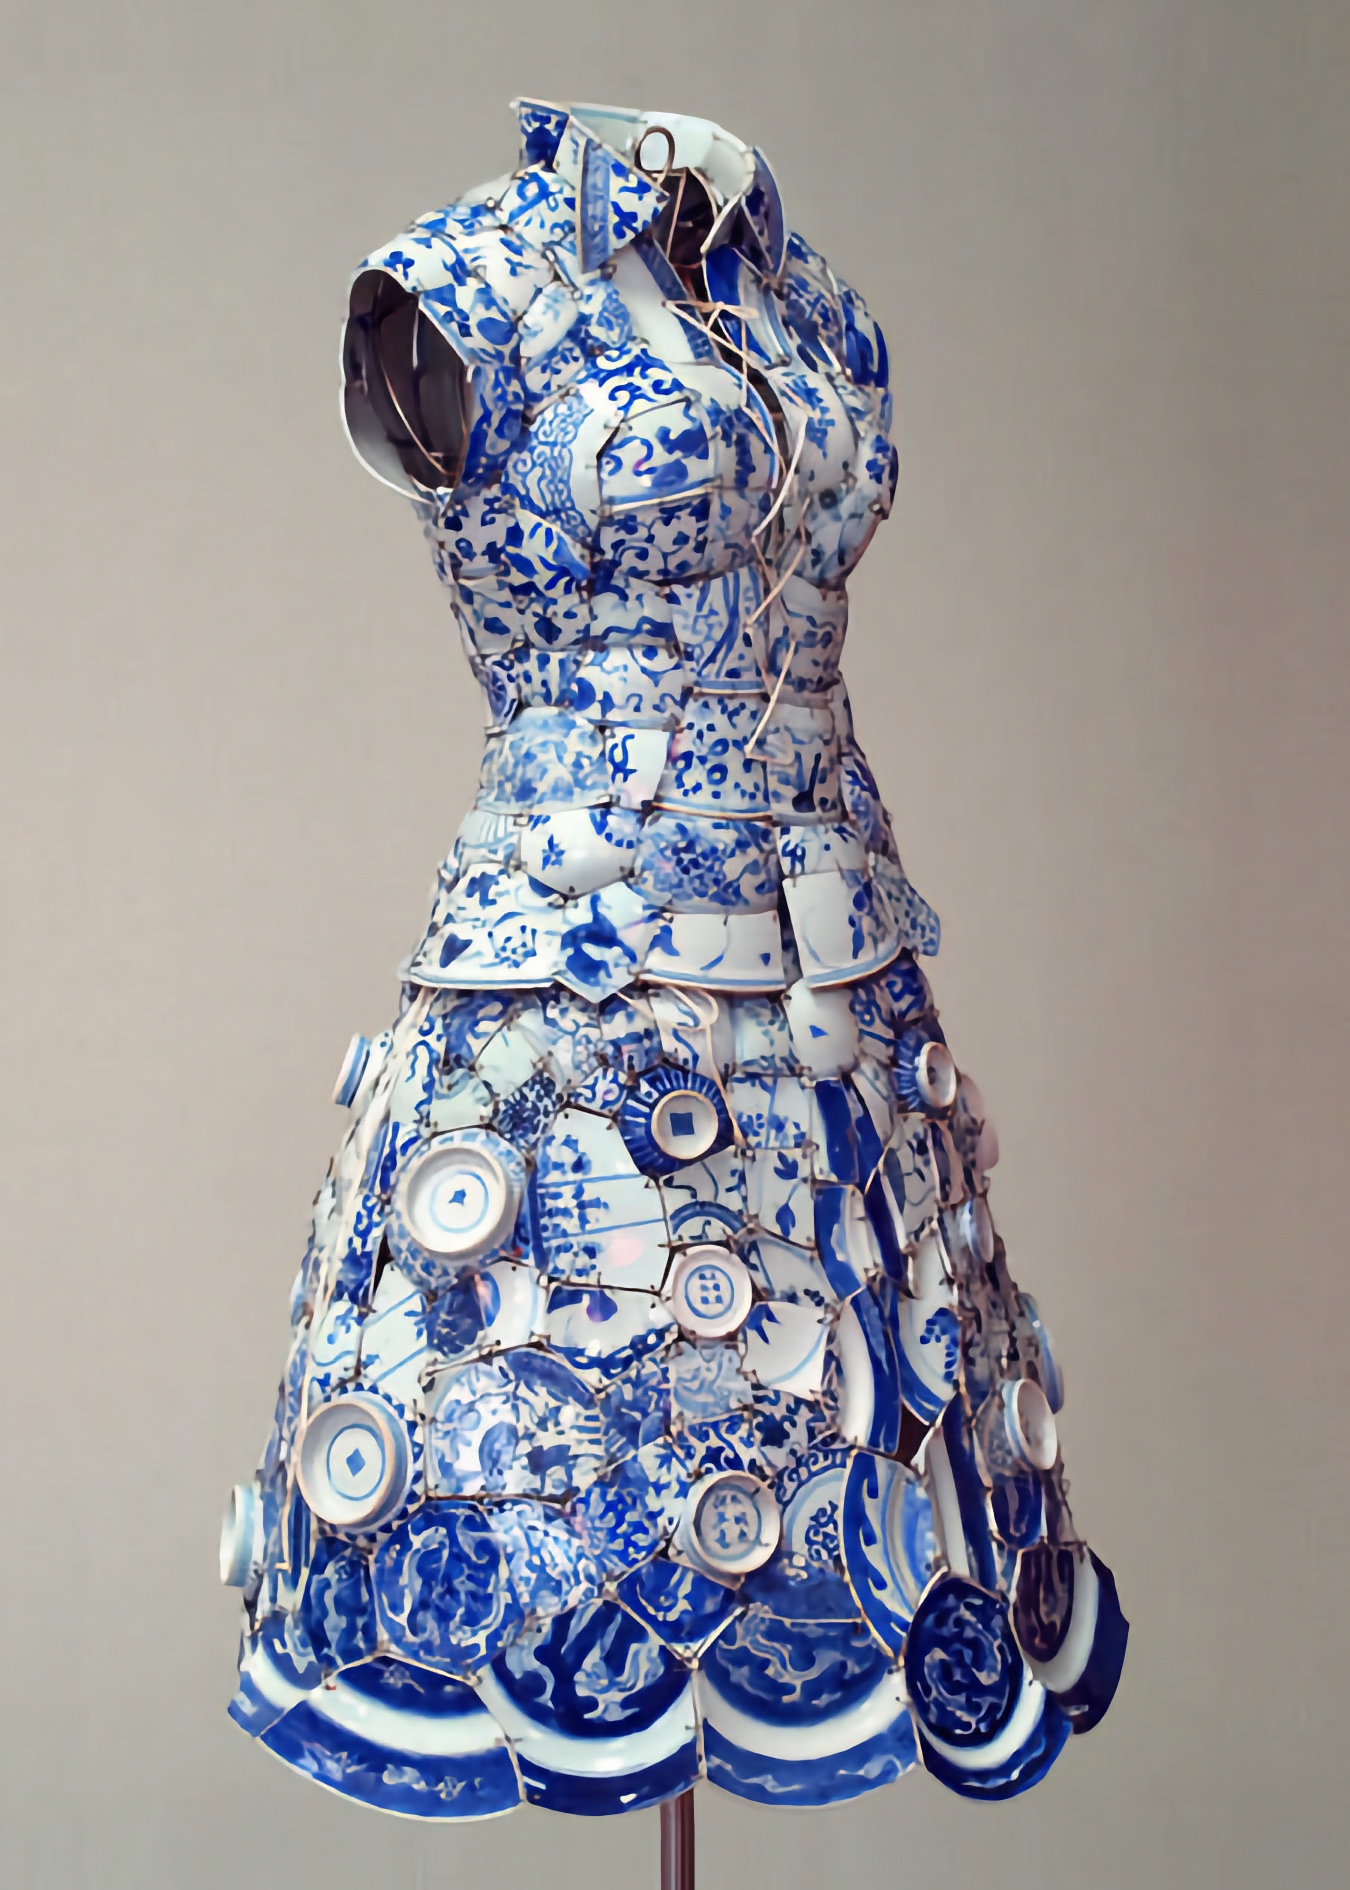 Porcelain Dress by Li Xiaofeng